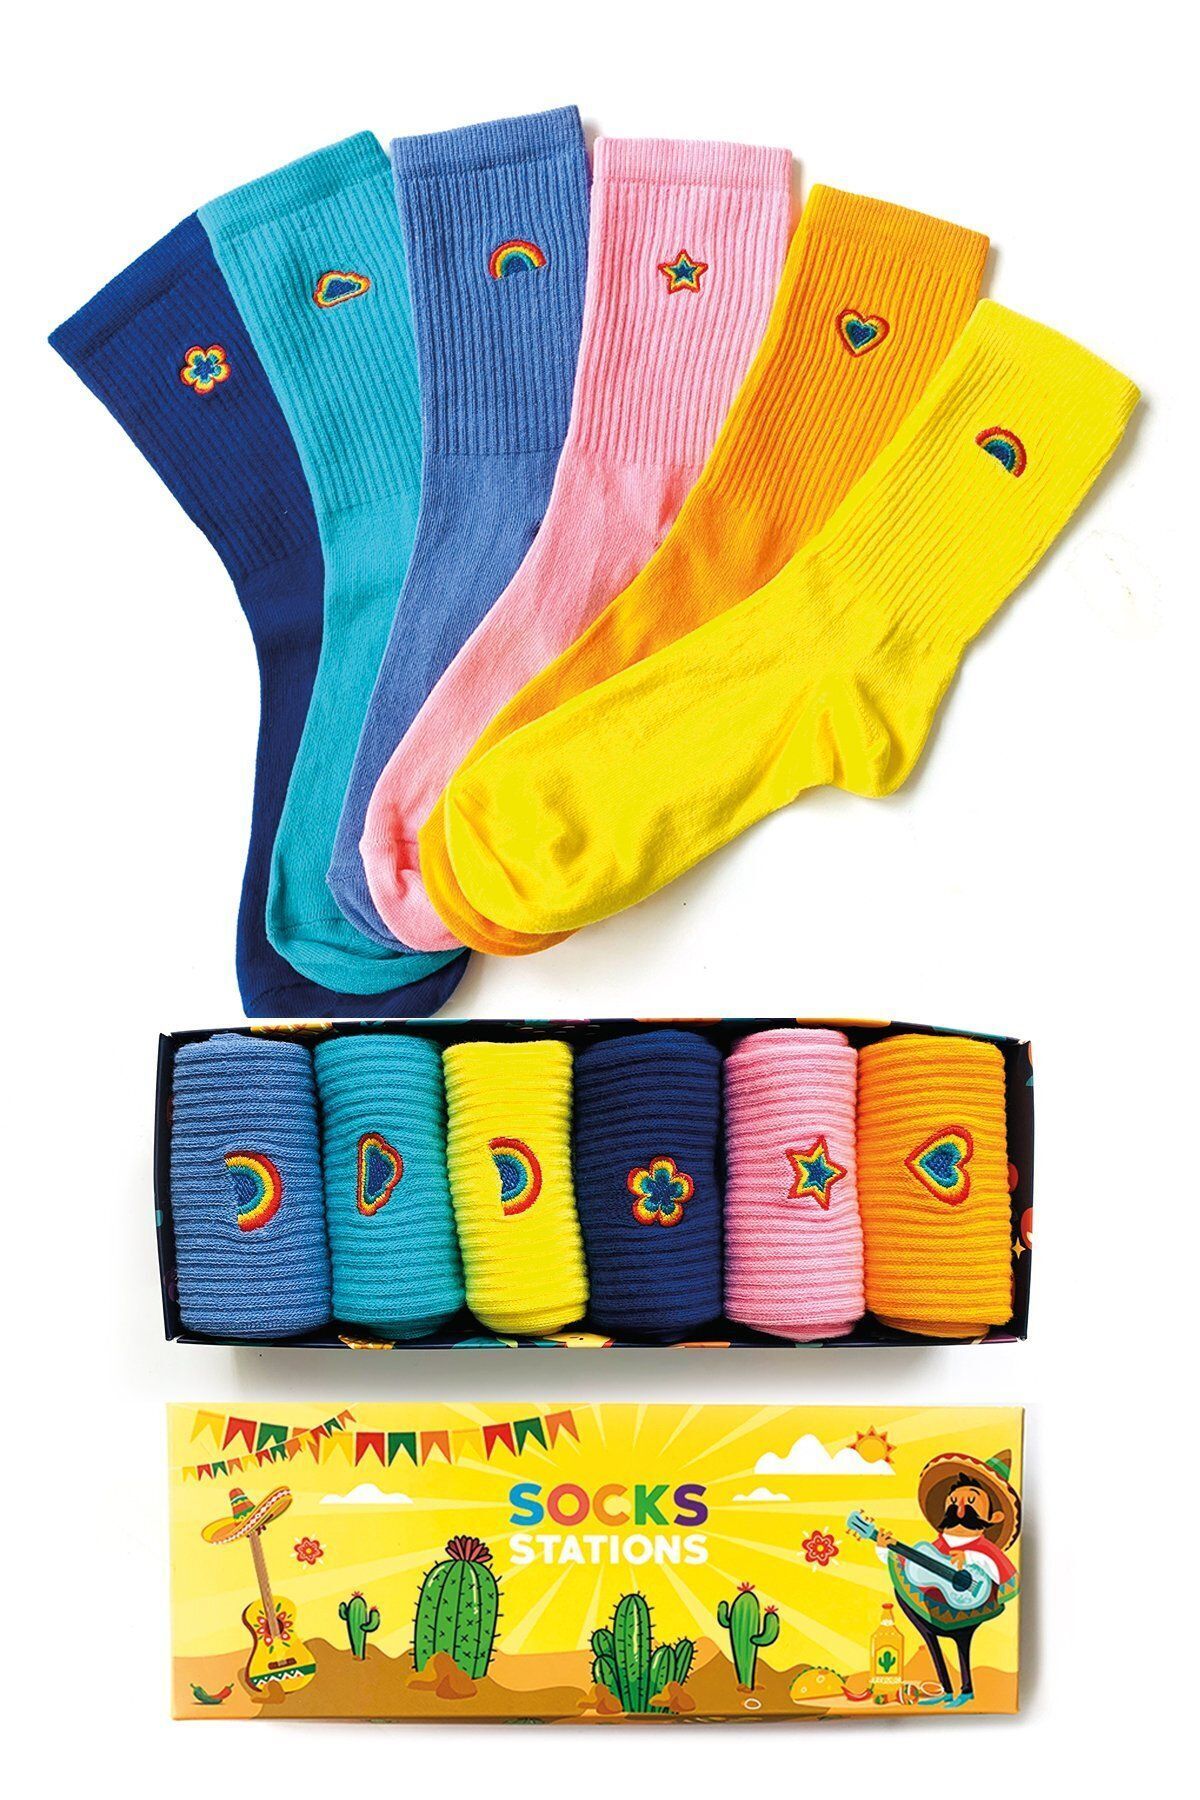 Socks Stations Ünisex Pastel Renkli, Gökkuşağı Nakışlı Çorap Kutusu 6’lı